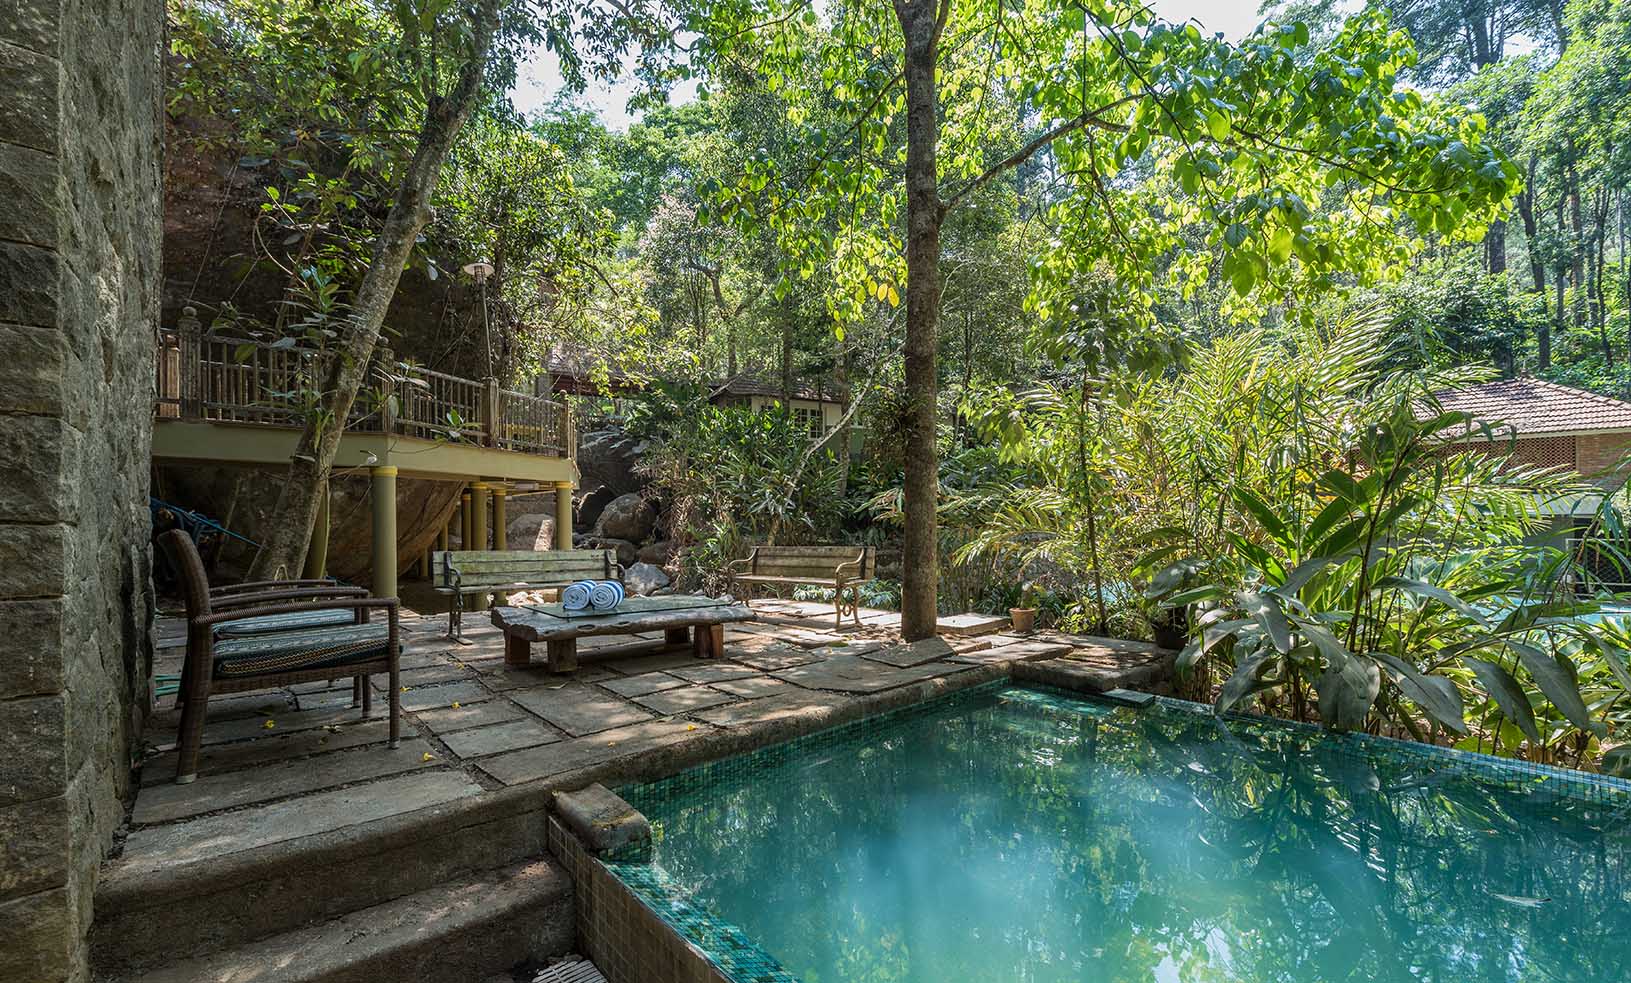 Best Jungle Resort In India, nature resorts in kerala